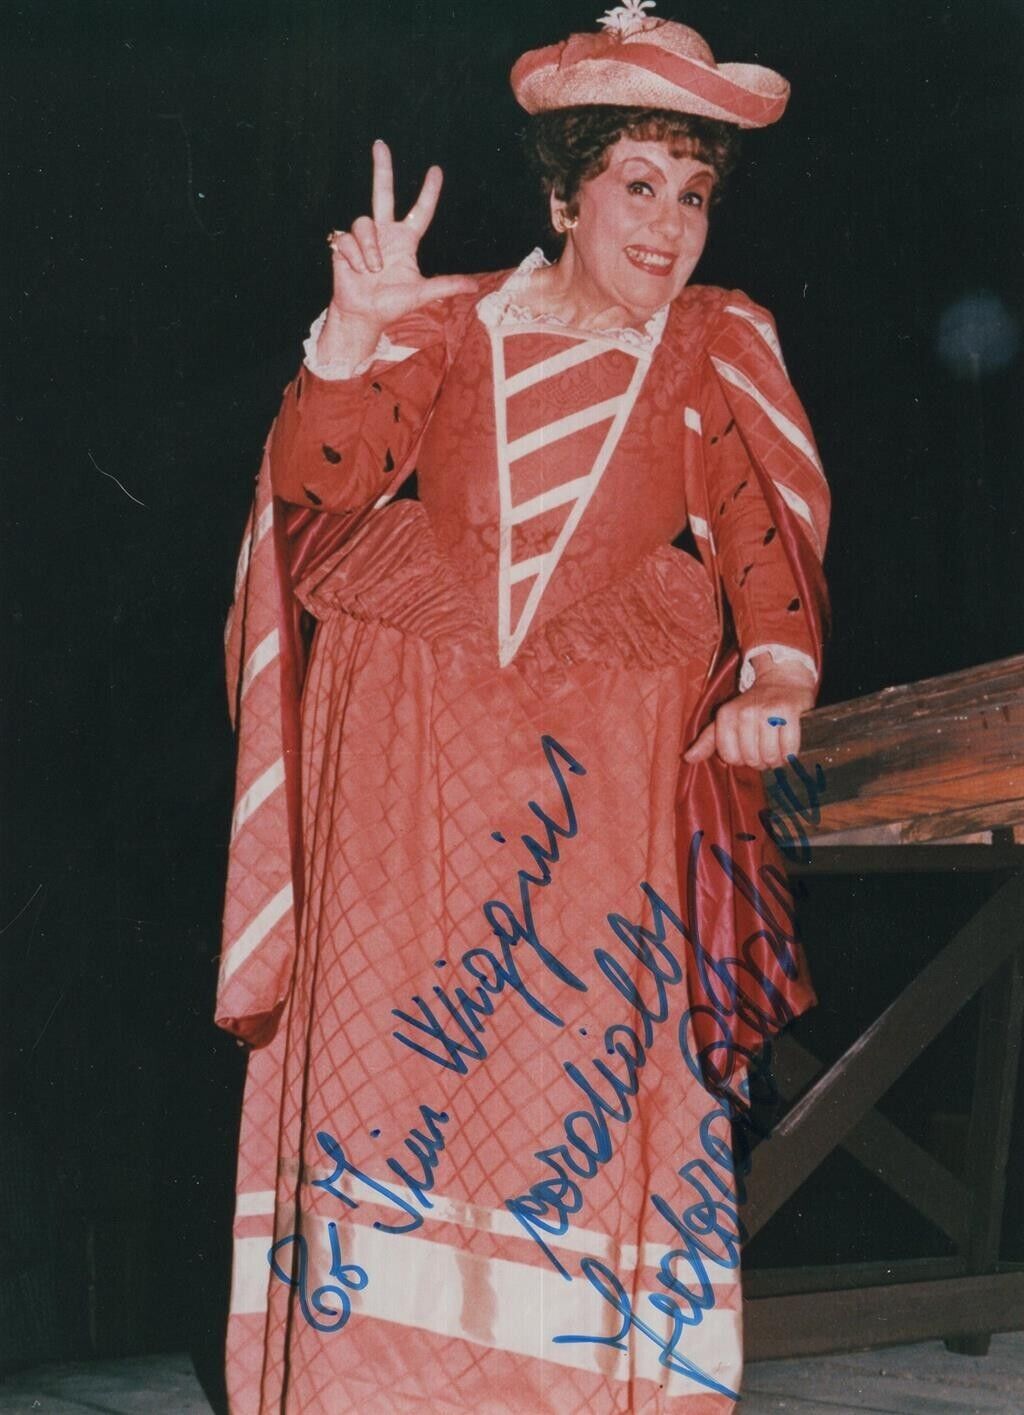 Fedora Barbieri- Signed Photograph (Opera Singer)